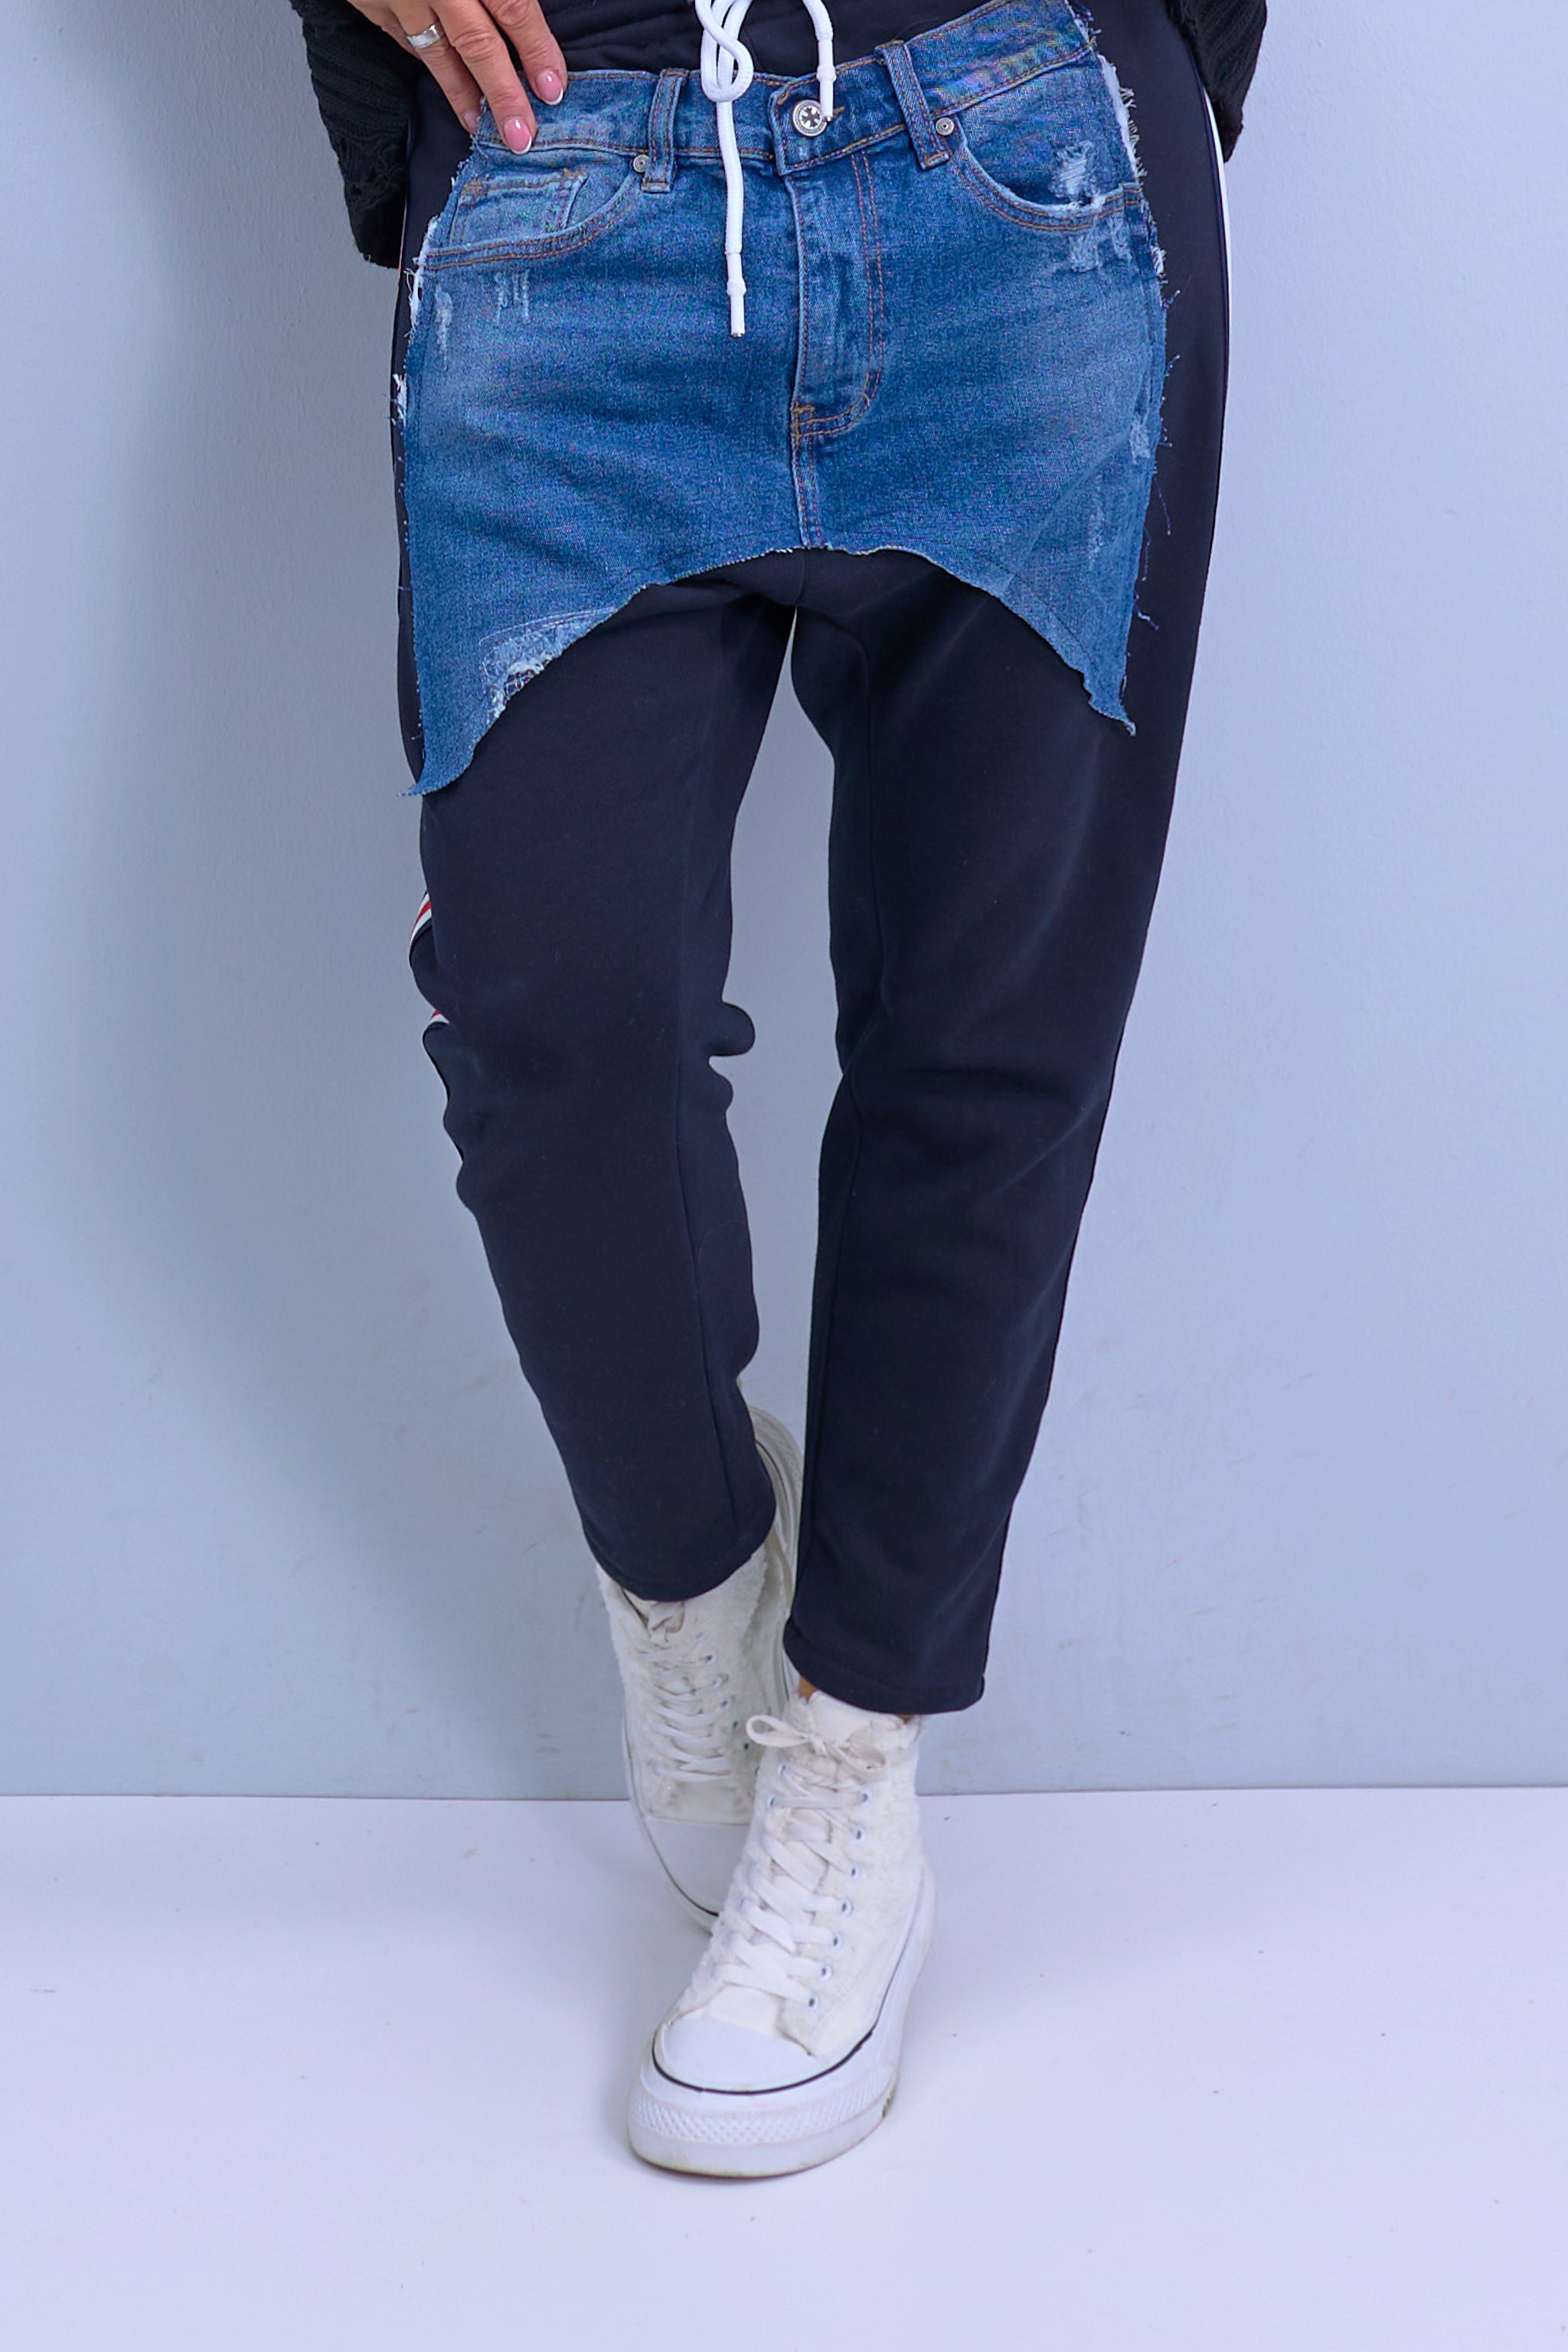 Sweat baggy with jeans insert, black-denim blue